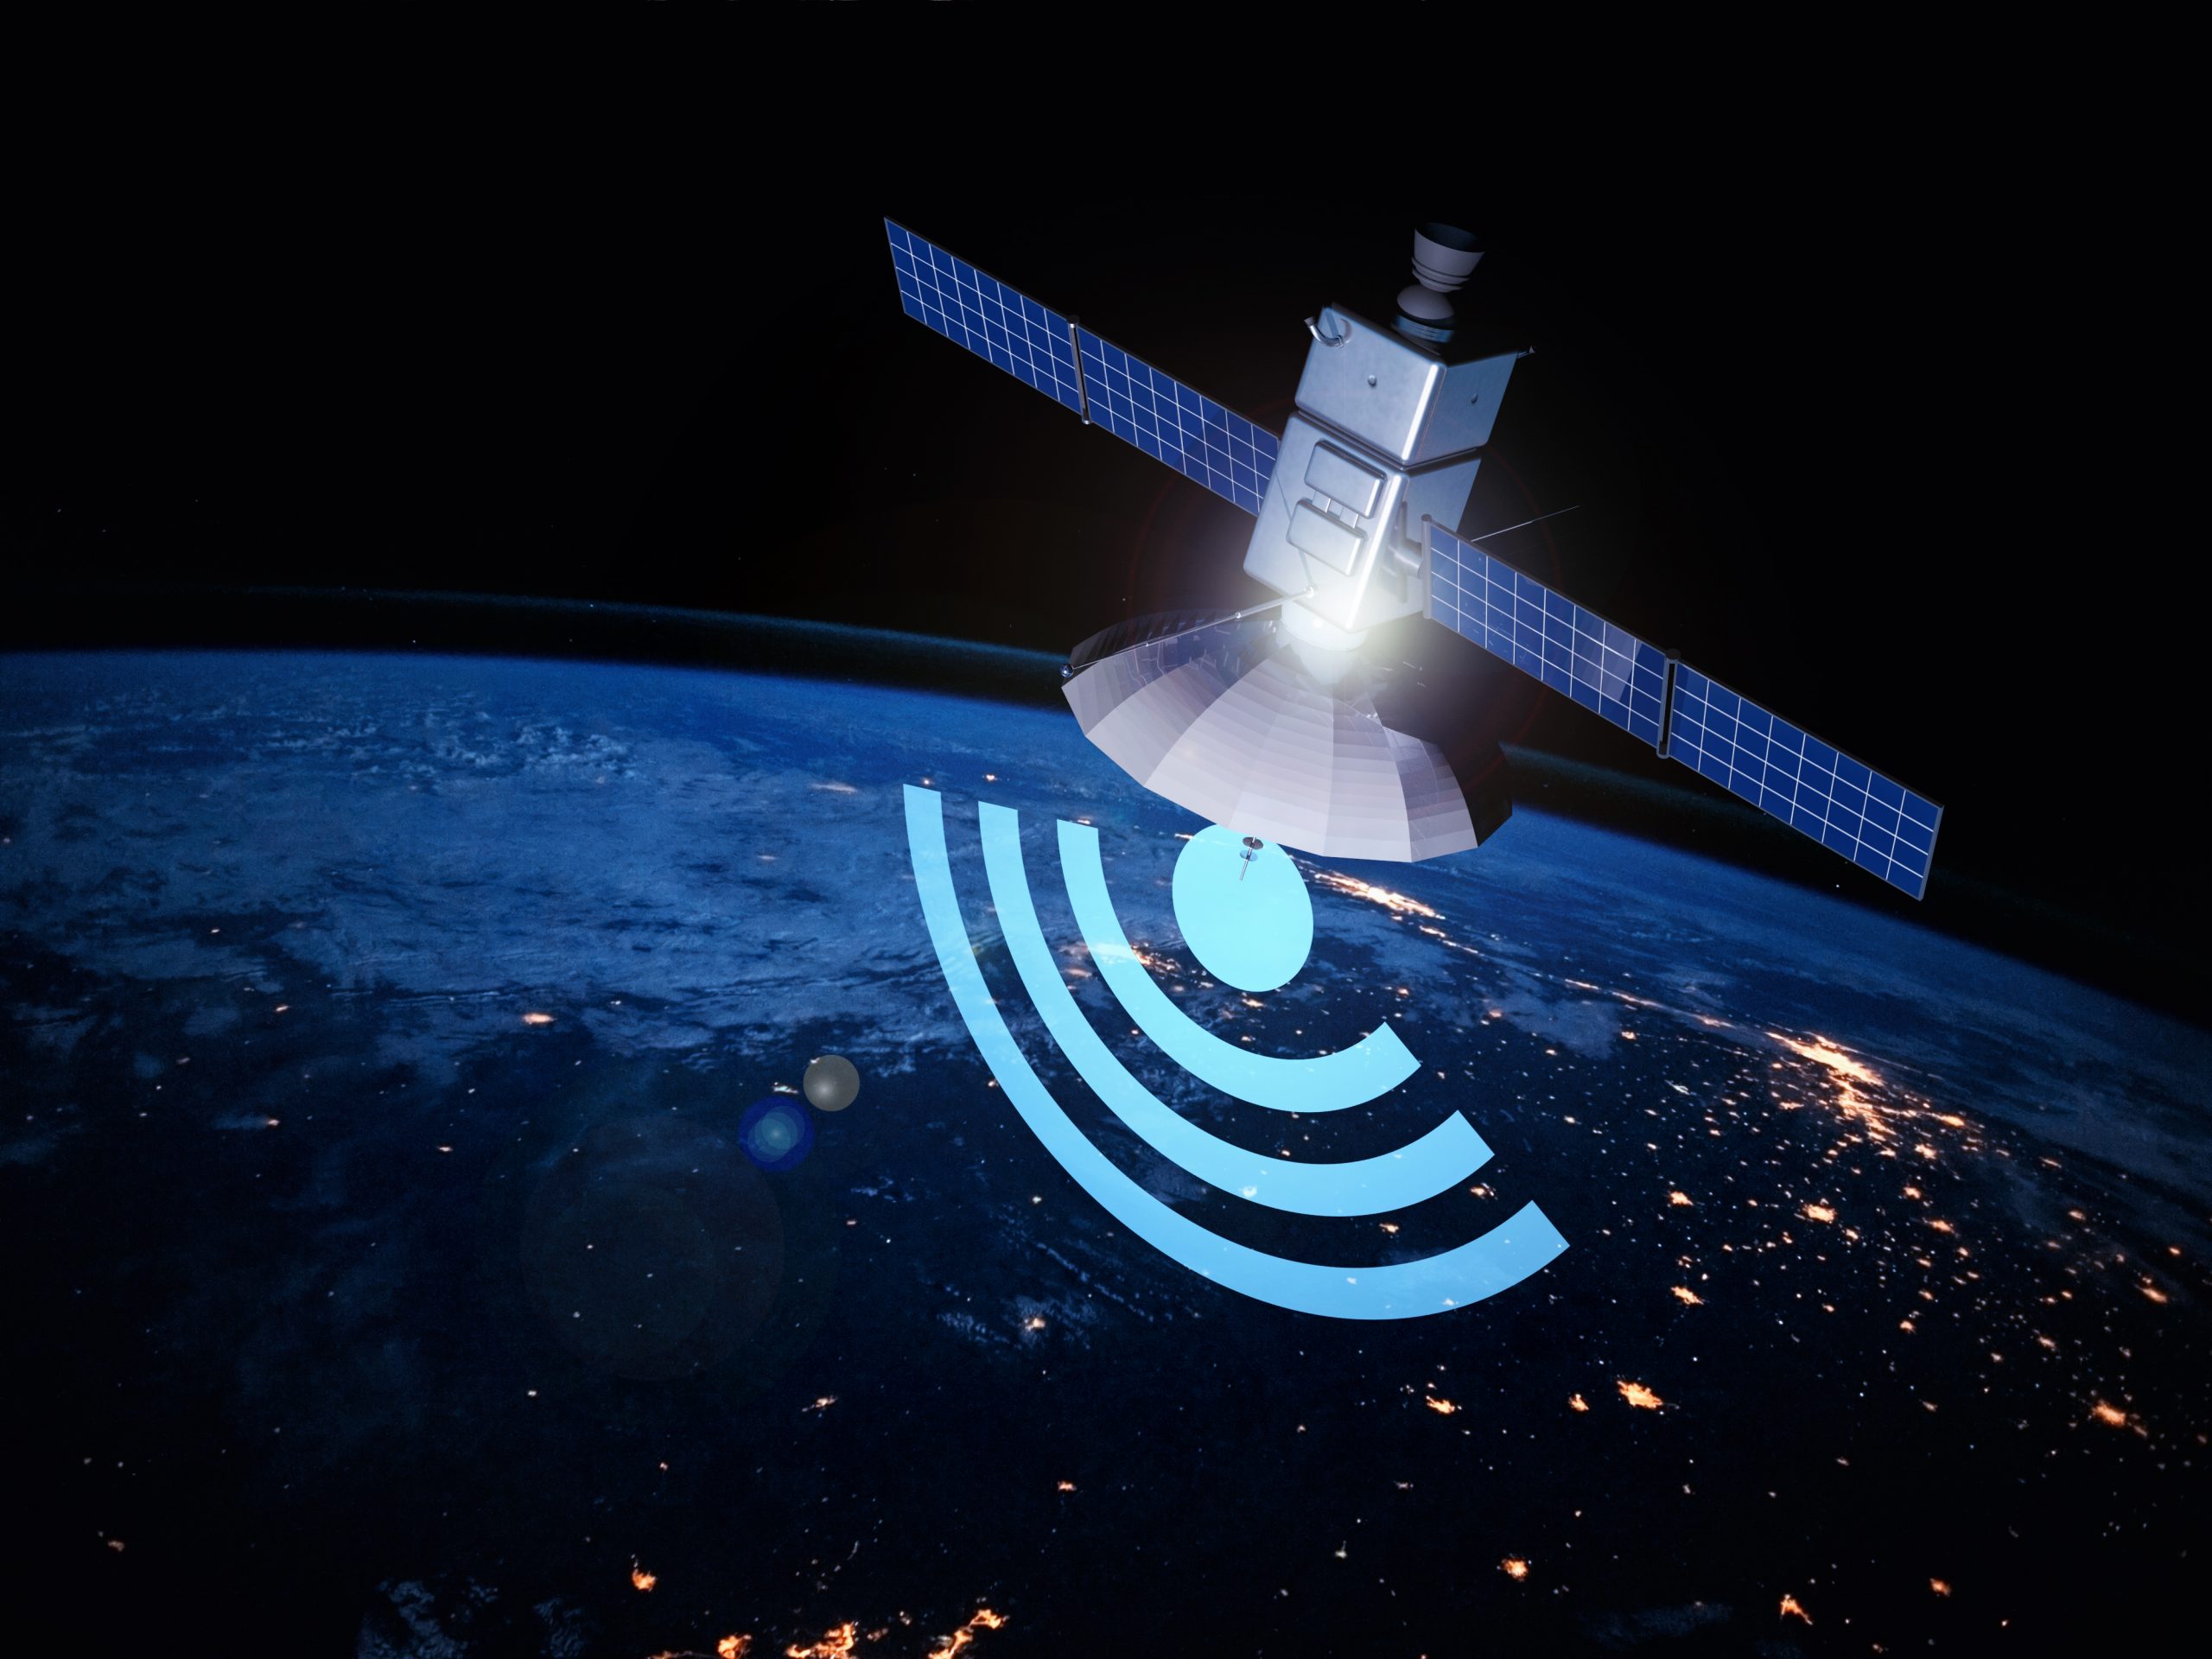 projet kuiper internet par satellite amazon